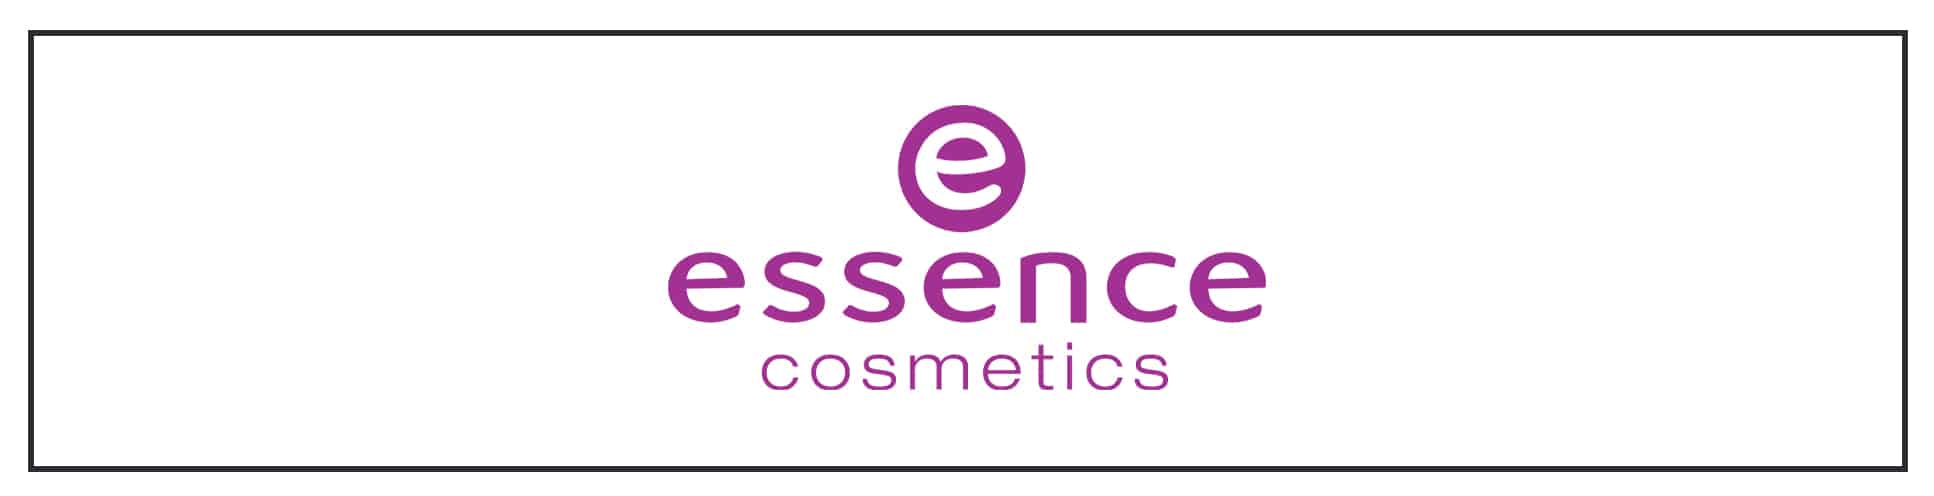 Essence cosmetics logo on a white background.